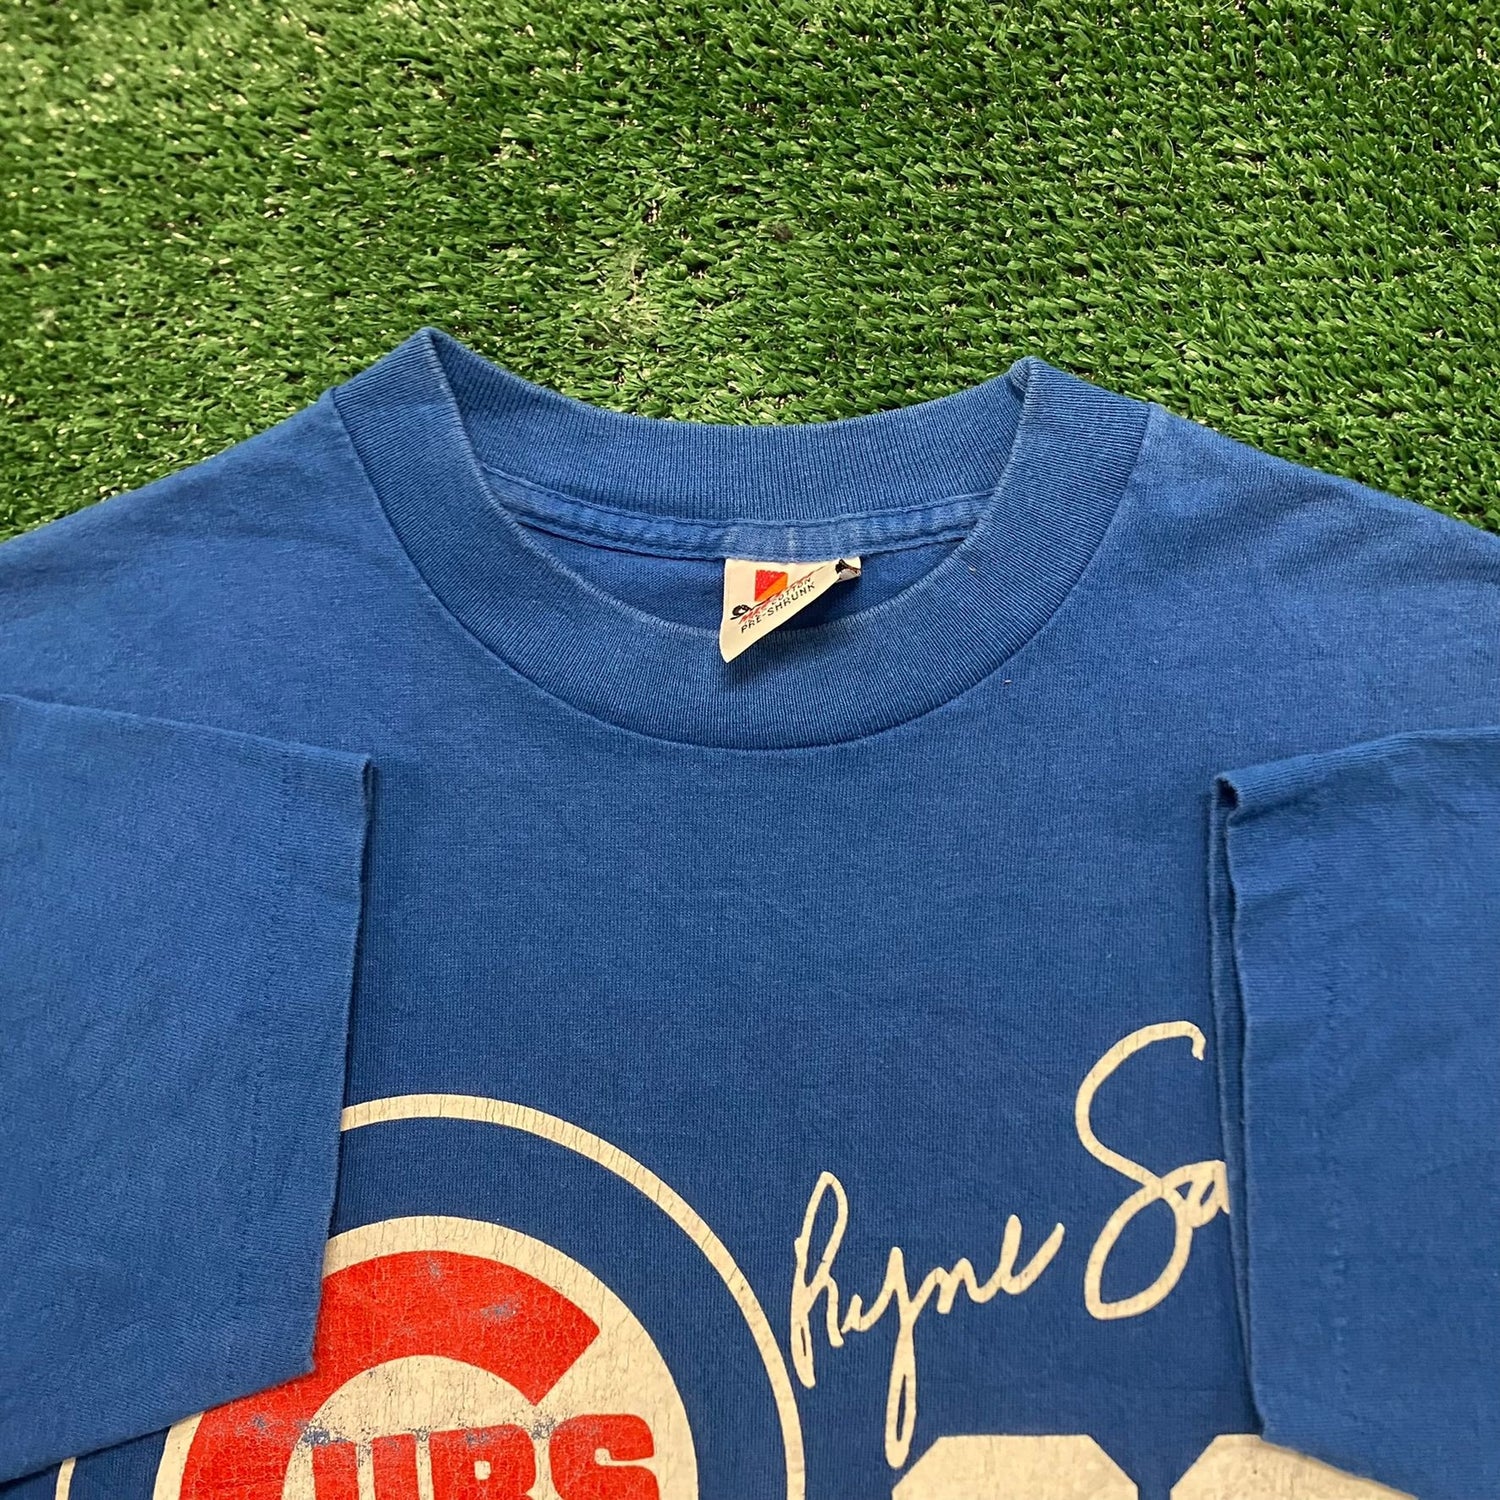 rayn sports, Shirts, Vintage Chicago Cubs Novelty Shirt